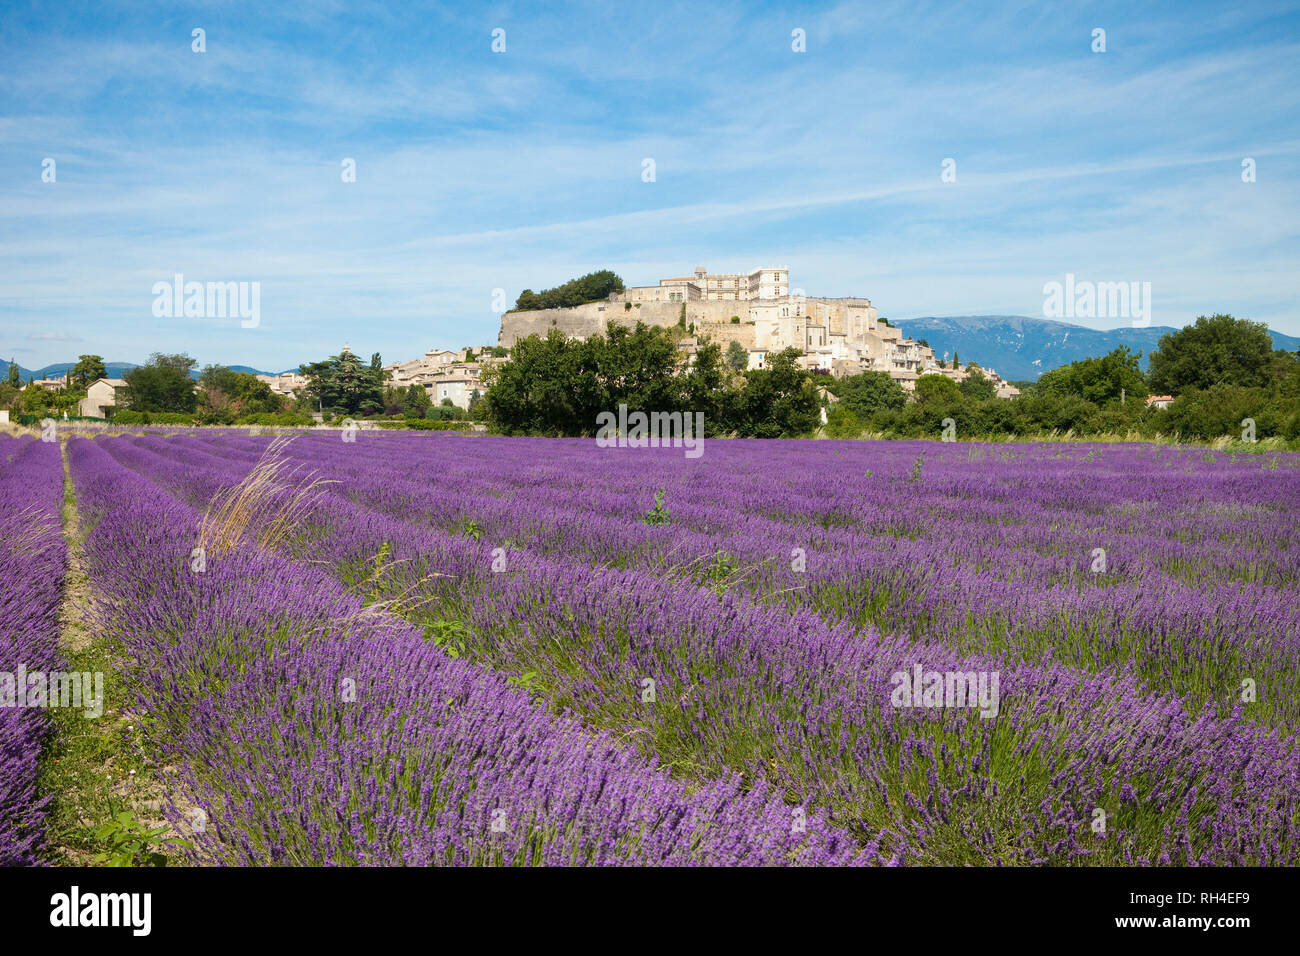 Idyllische, sonnige Lavendelfeld, Valence, Auvergne-Rh ne-Alpes, Frankreich Stockfoto